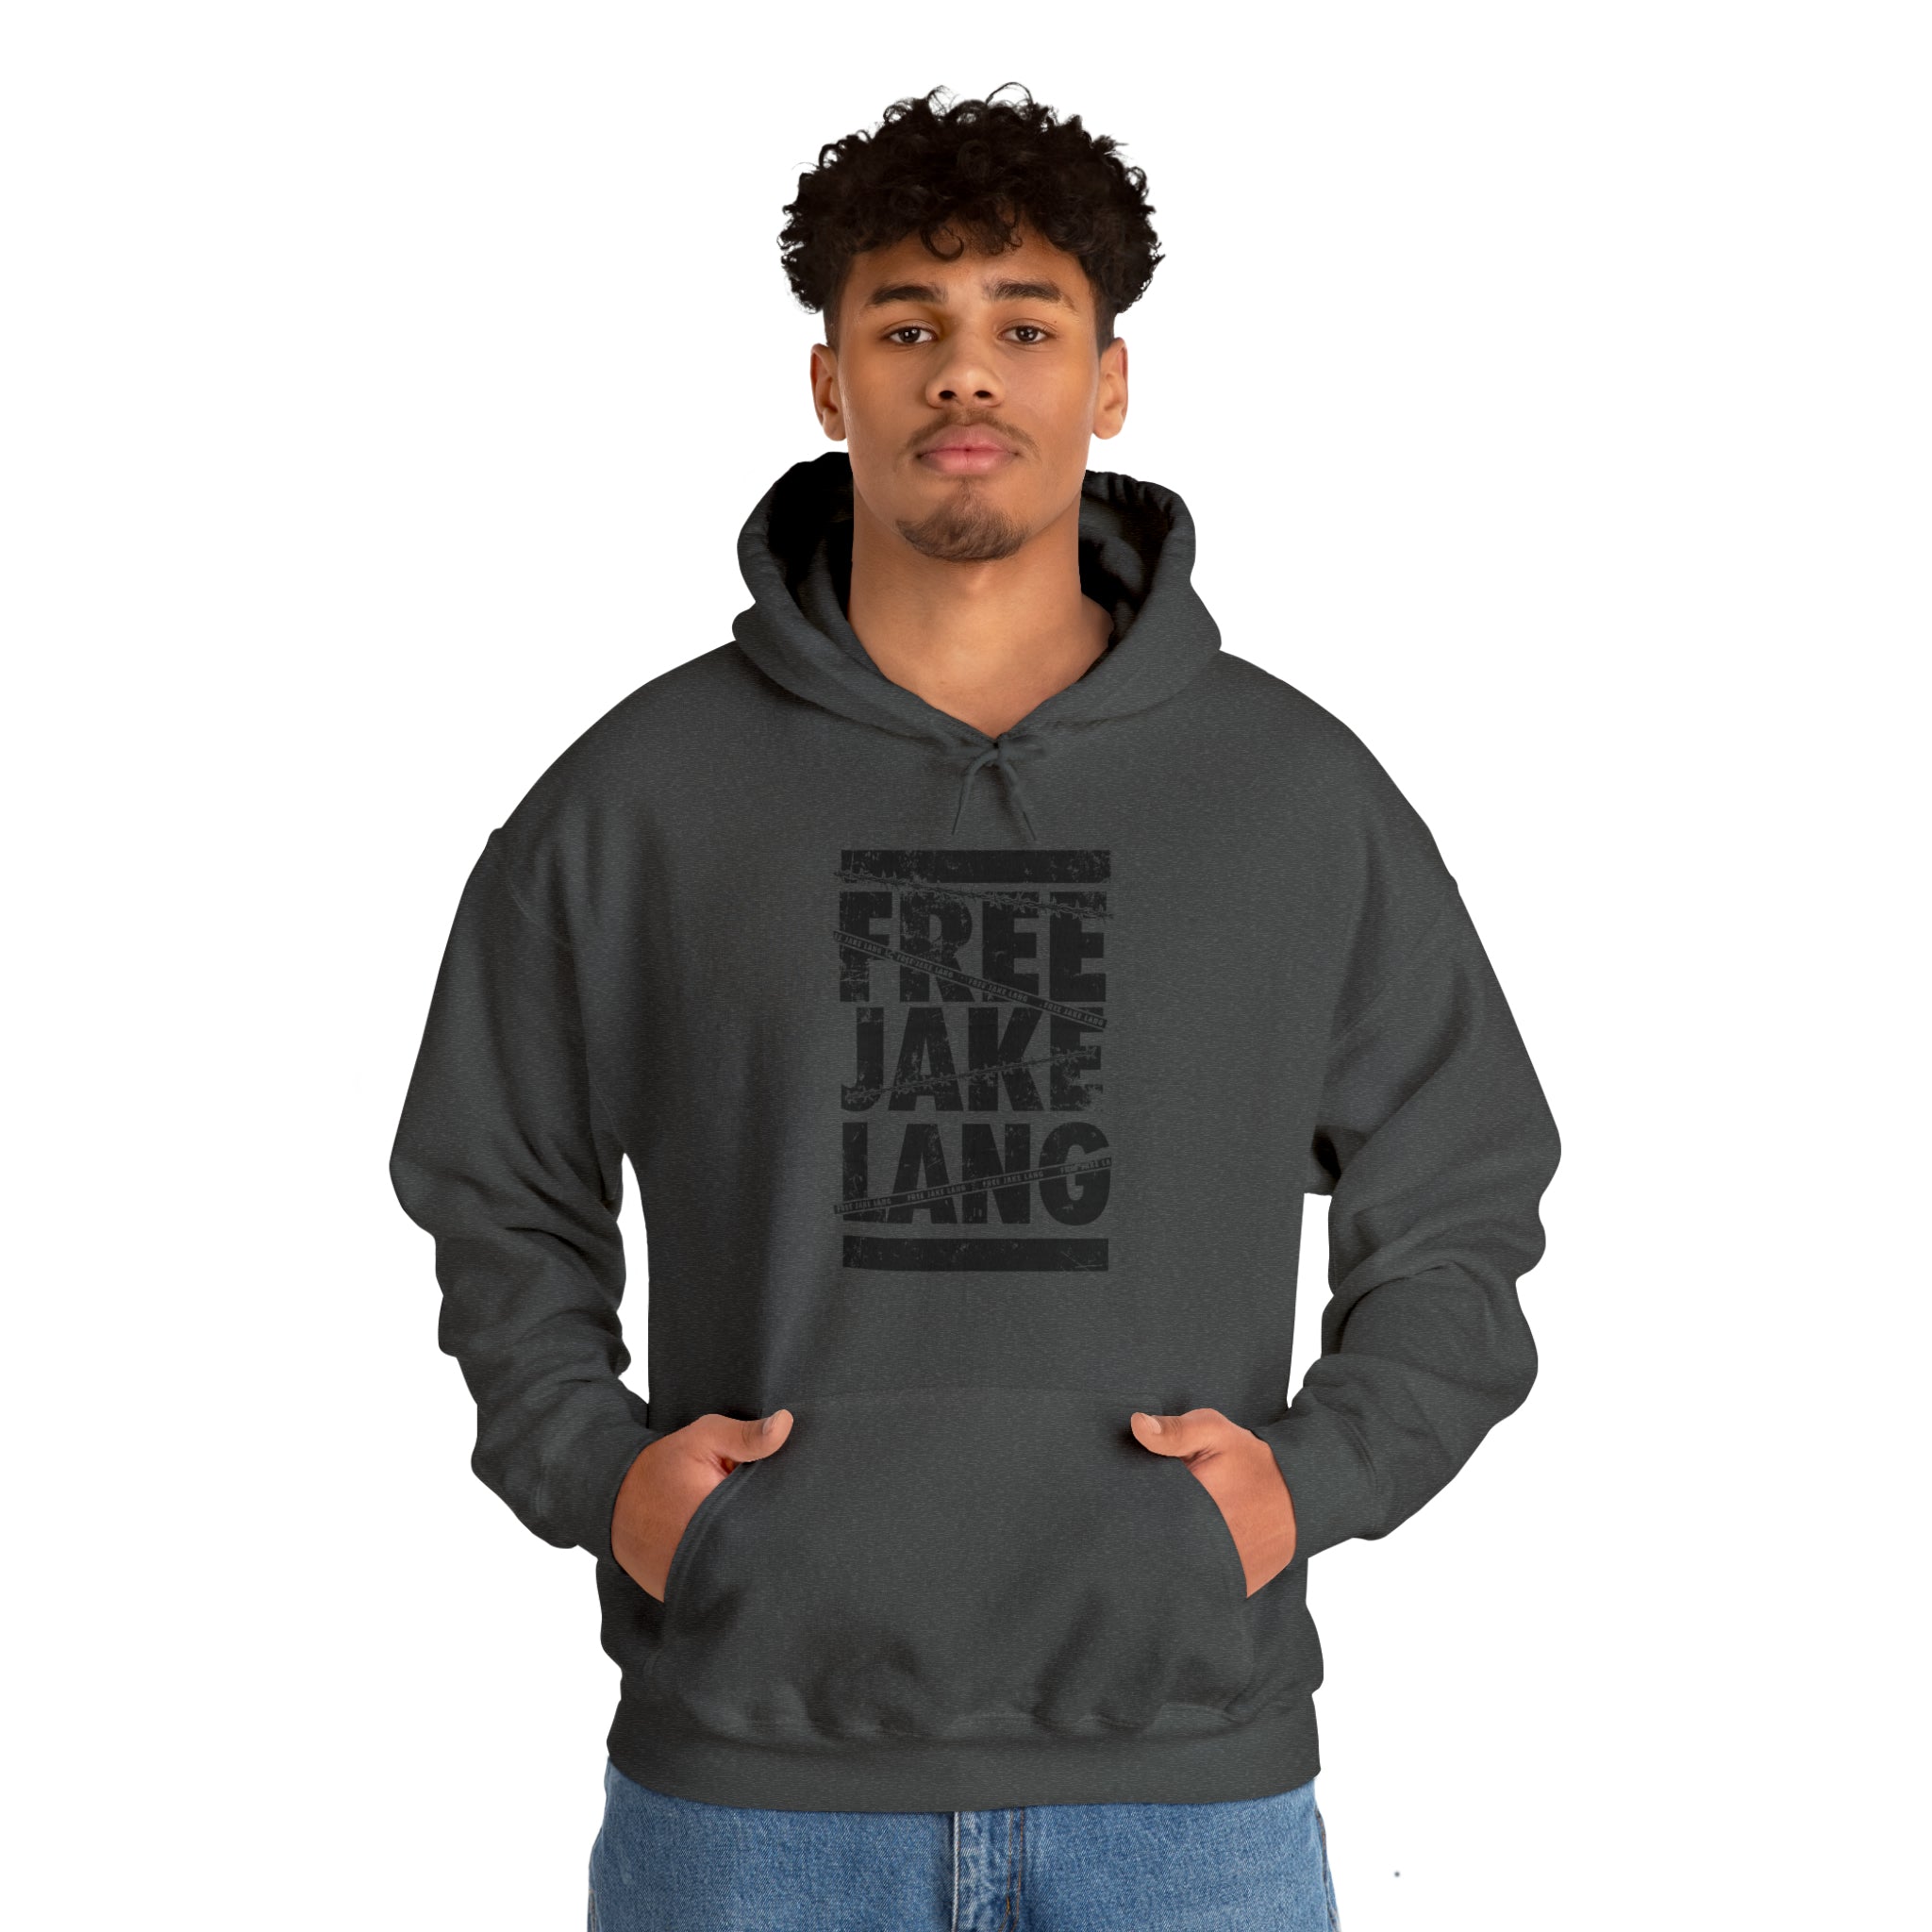 FREE JL CAUTION TAPE BLACK TEXT Hooded Sweatshirt